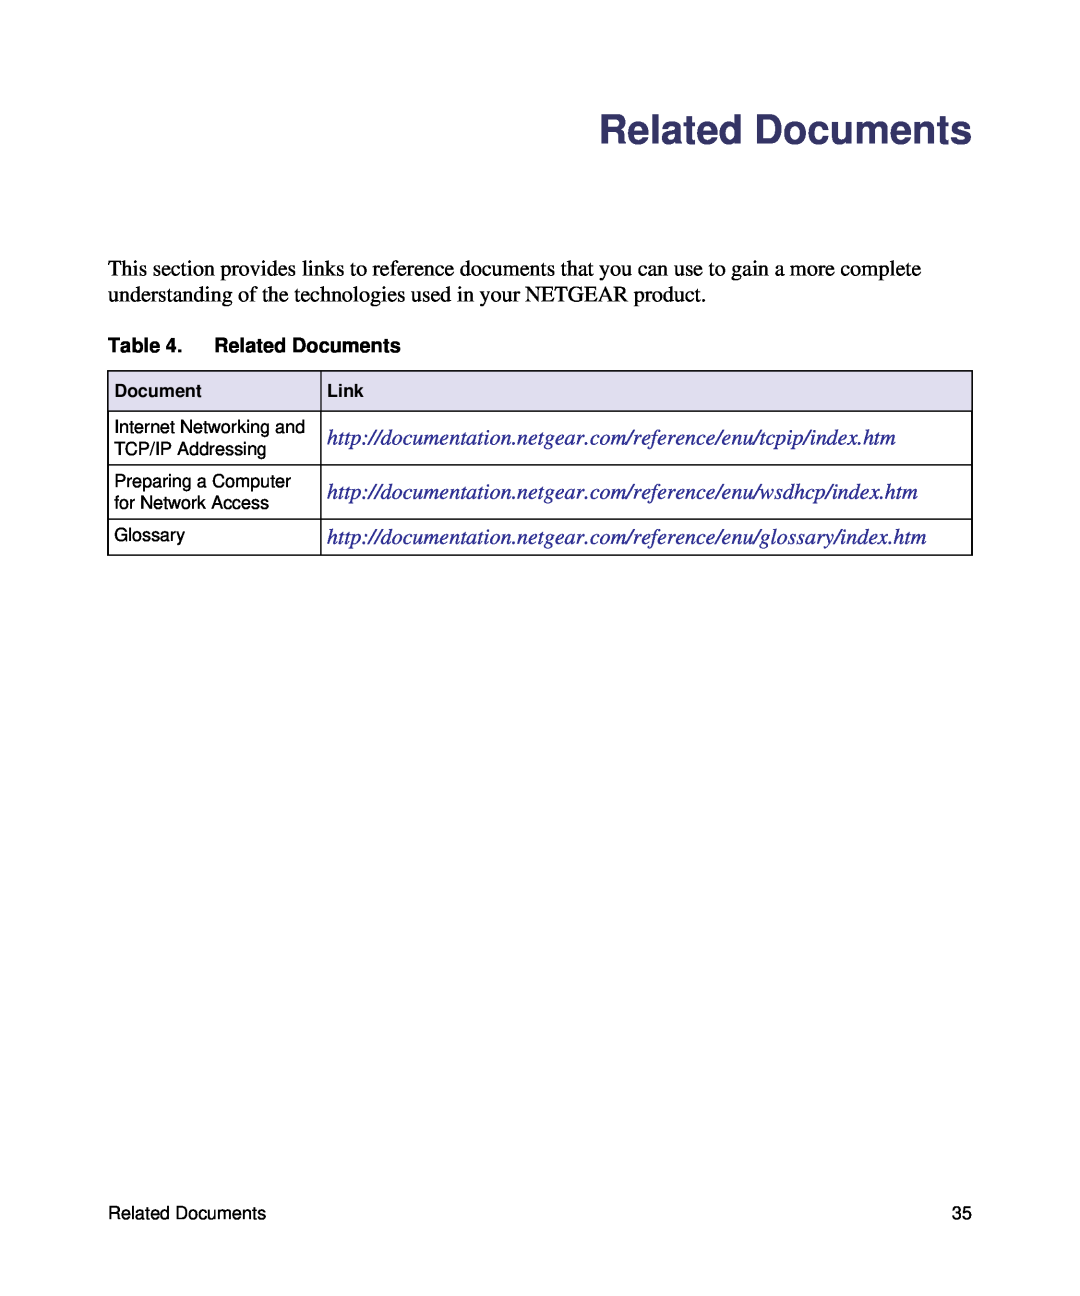 NETGEAR WNR1000, N150 manual Related Documents, http//documentation.netgear.com/reference/enu/wsdhcp/index.htm, Link 